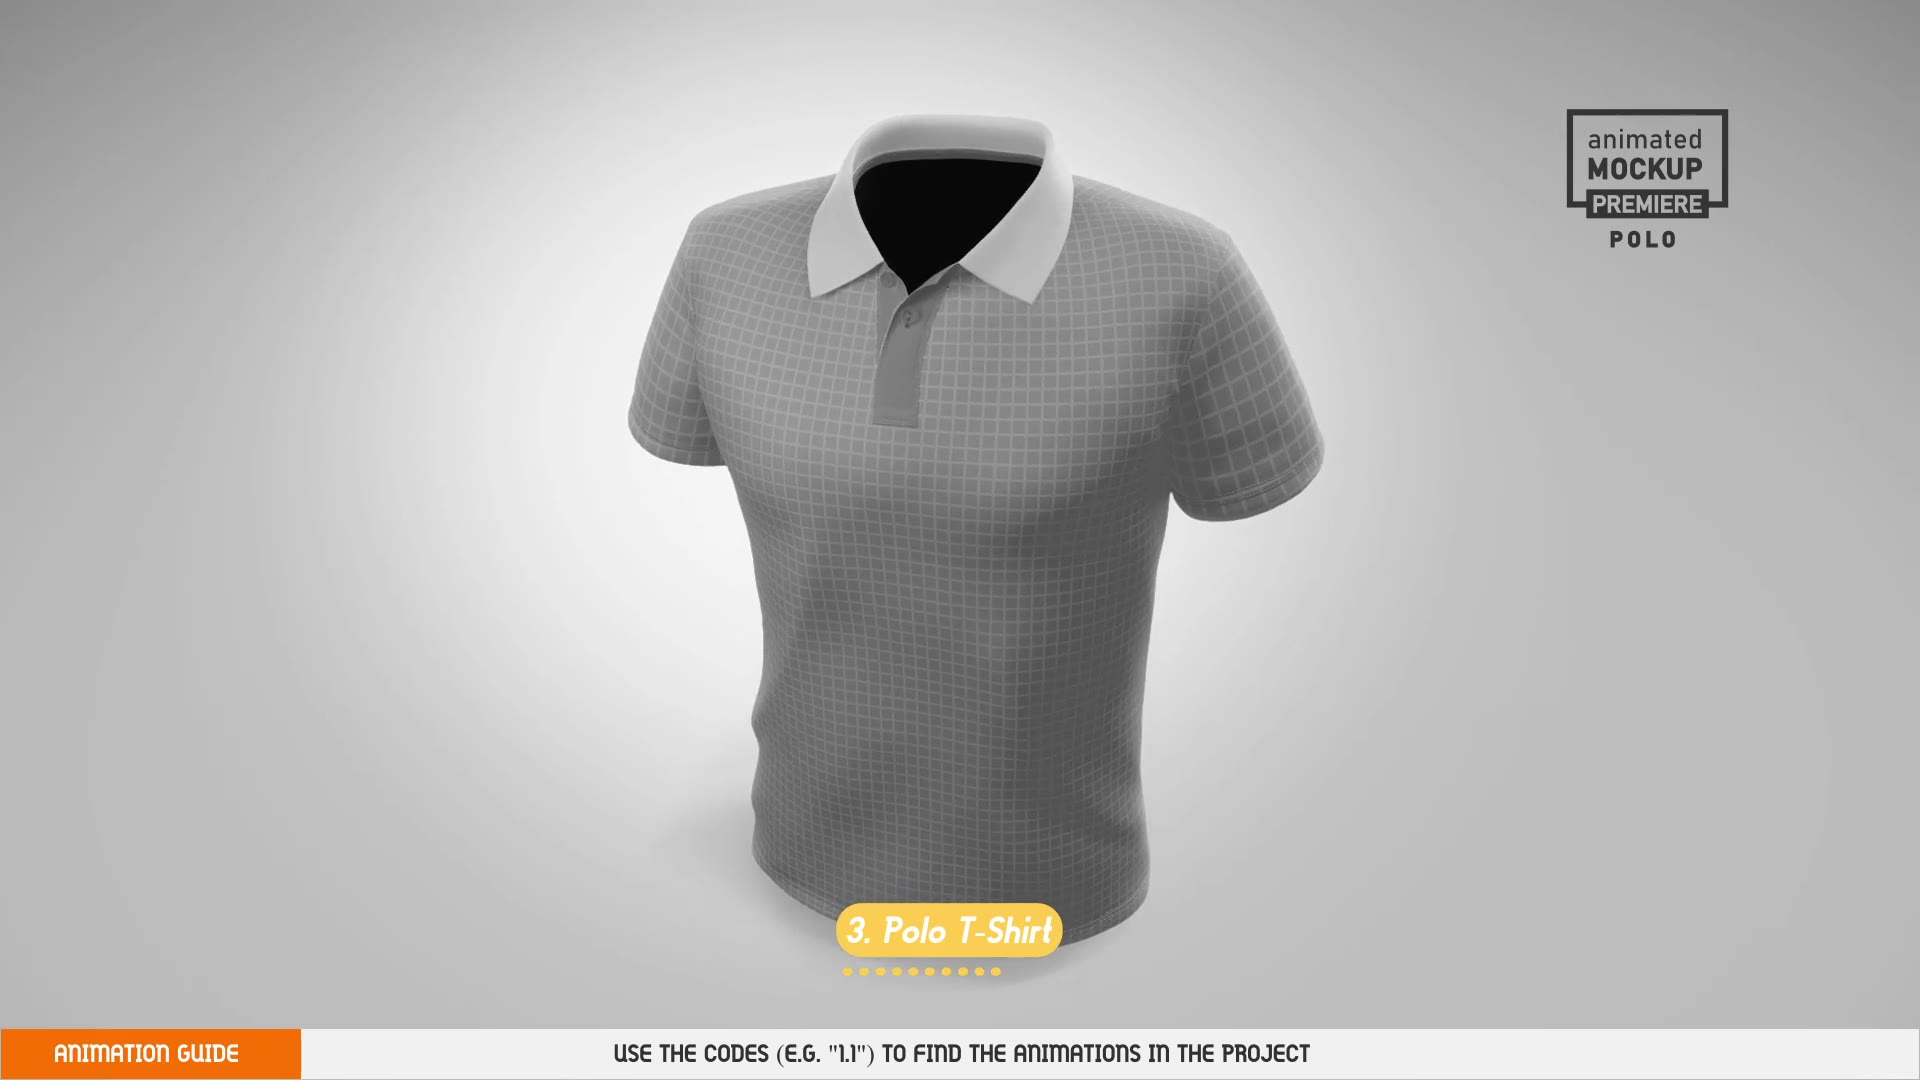 Polo T shirt 5 Scenes Mockup Template Animated Mockup PREMIERE Videohive 33877905 Premiere Pro Image 10